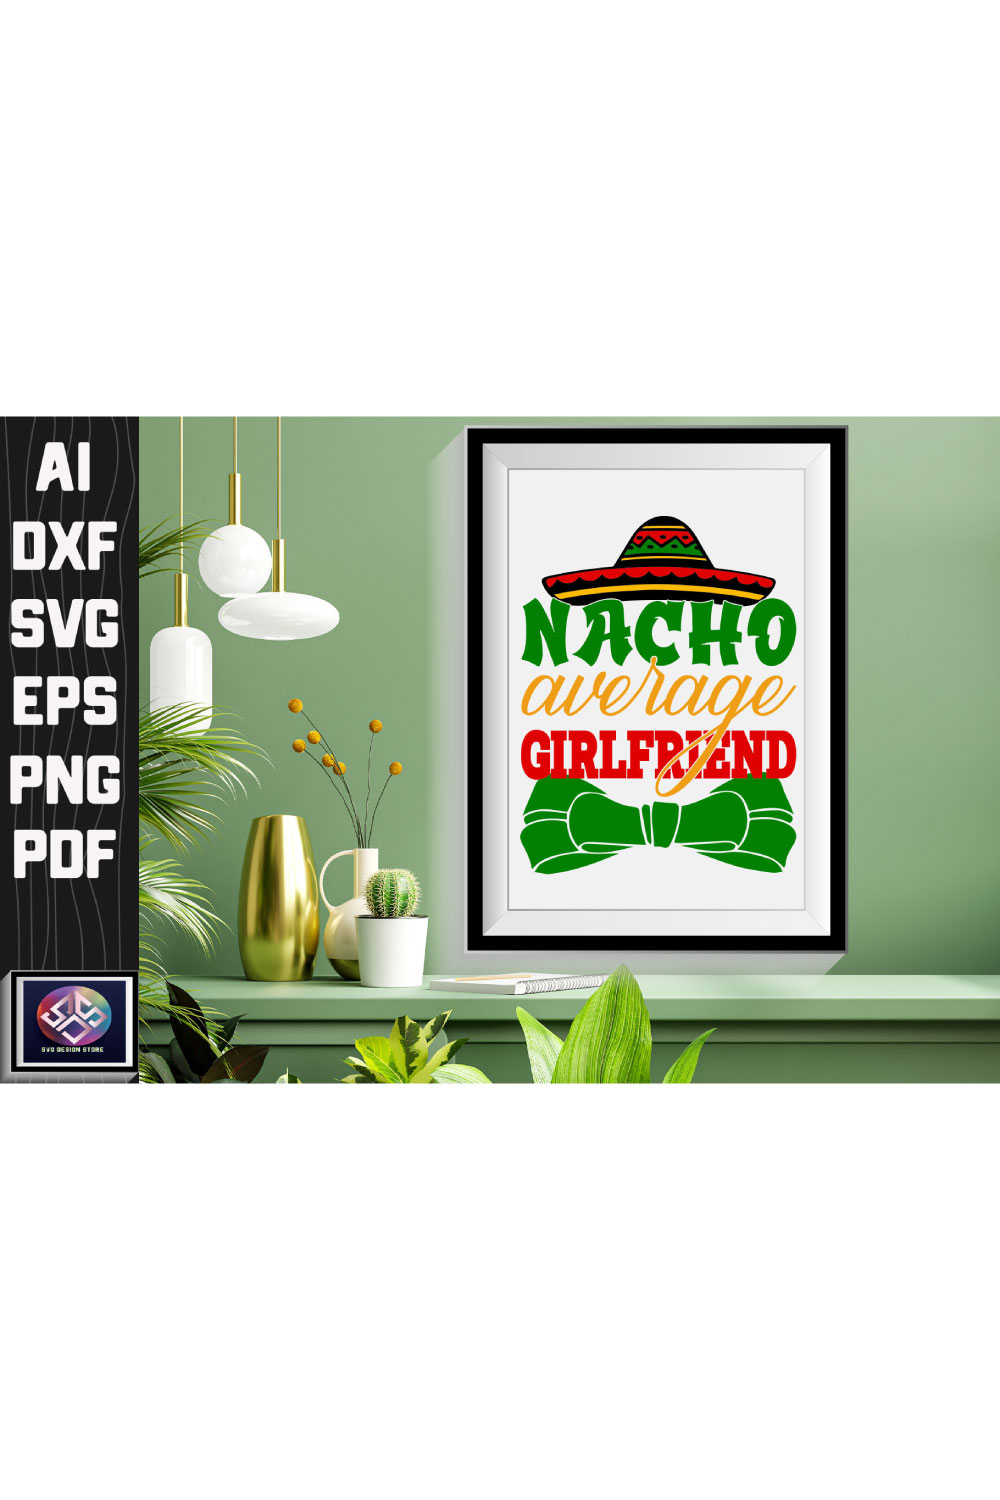 Nacho Average Girlfriend pinterest preview image.